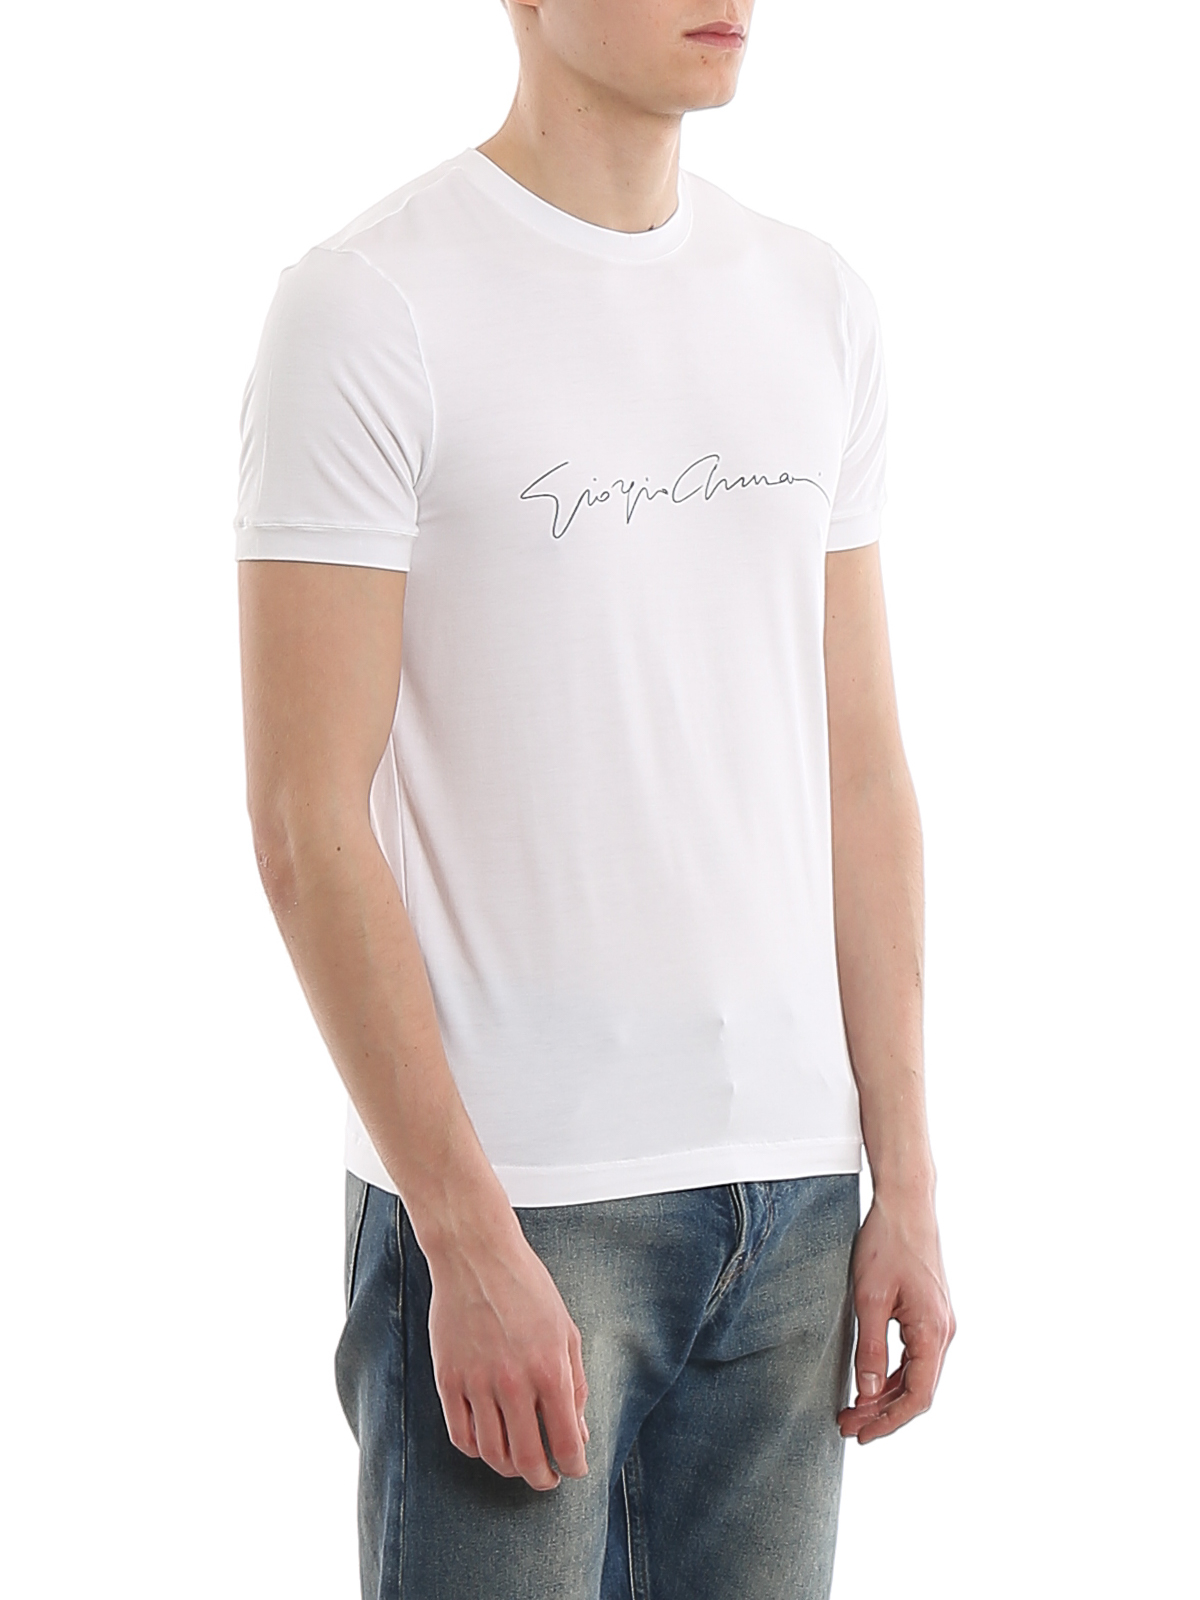 China leef ermee Waarnemen T-shirts Giorgio Armani - Signature print T-shirt - 6GST56SJP4ZU090